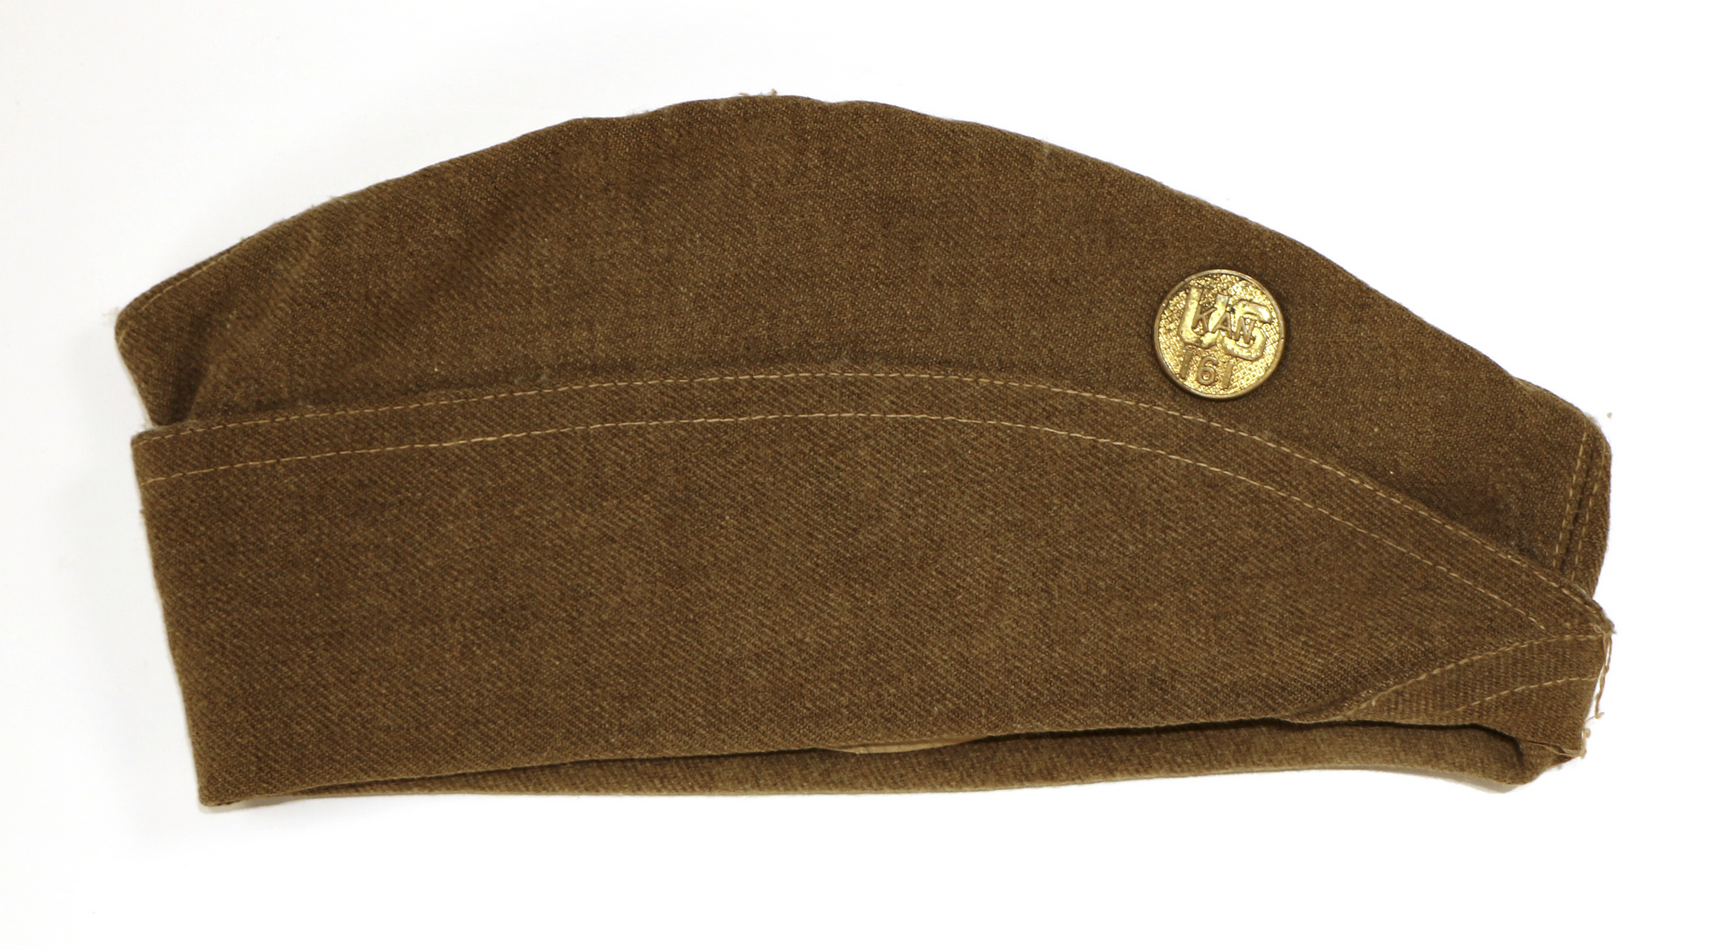 Modern photograph of a WWI U.S. soldier uniform cap